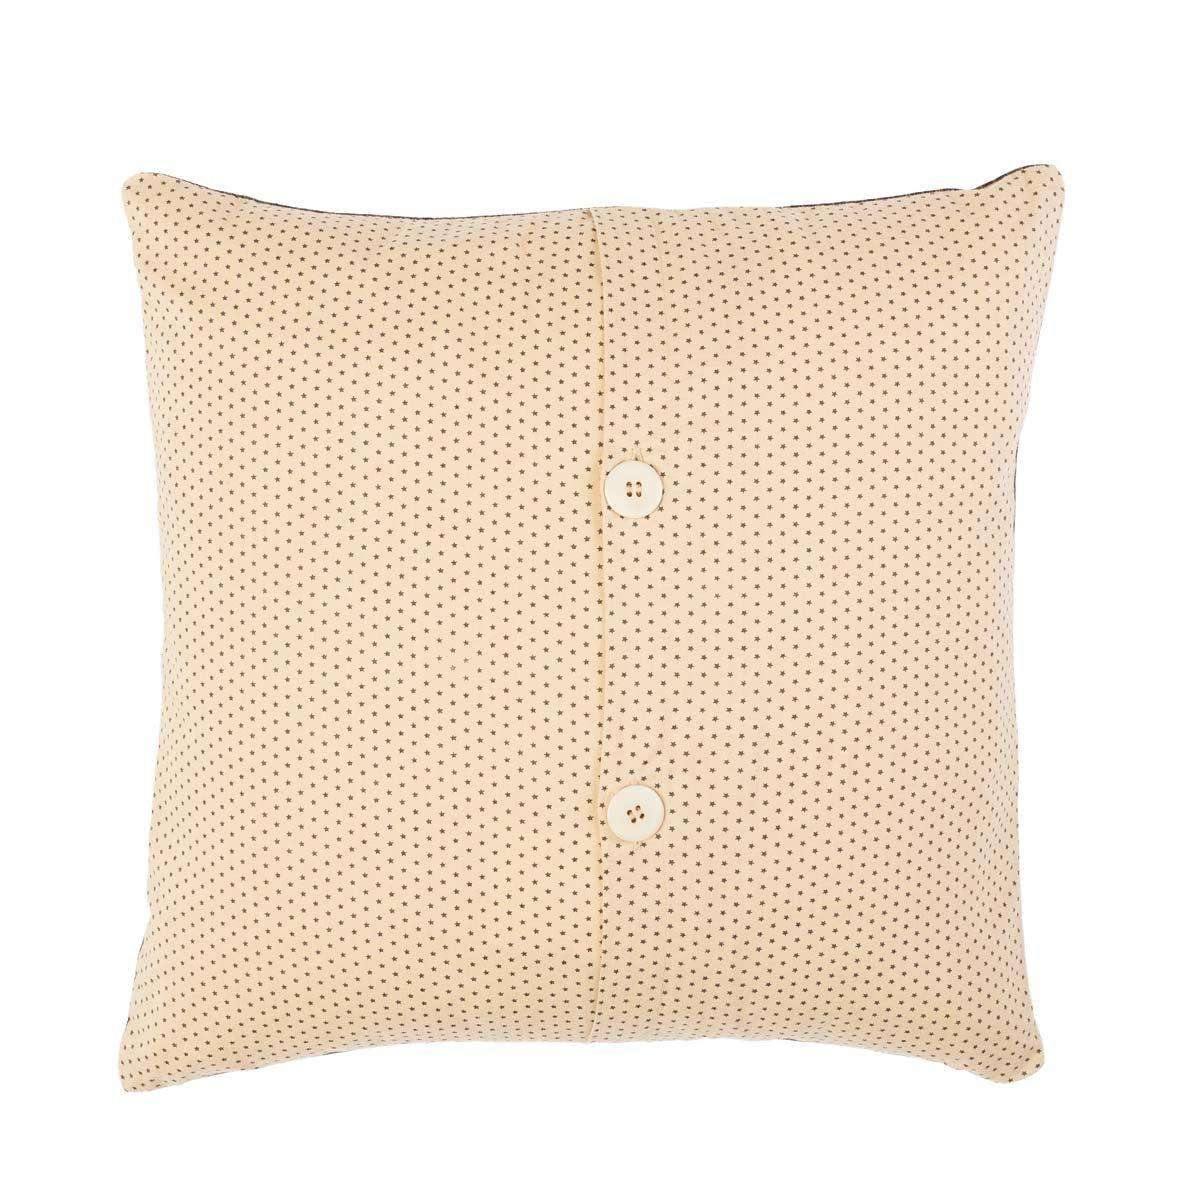 Kettle Grove Pillow Star 16x16 back